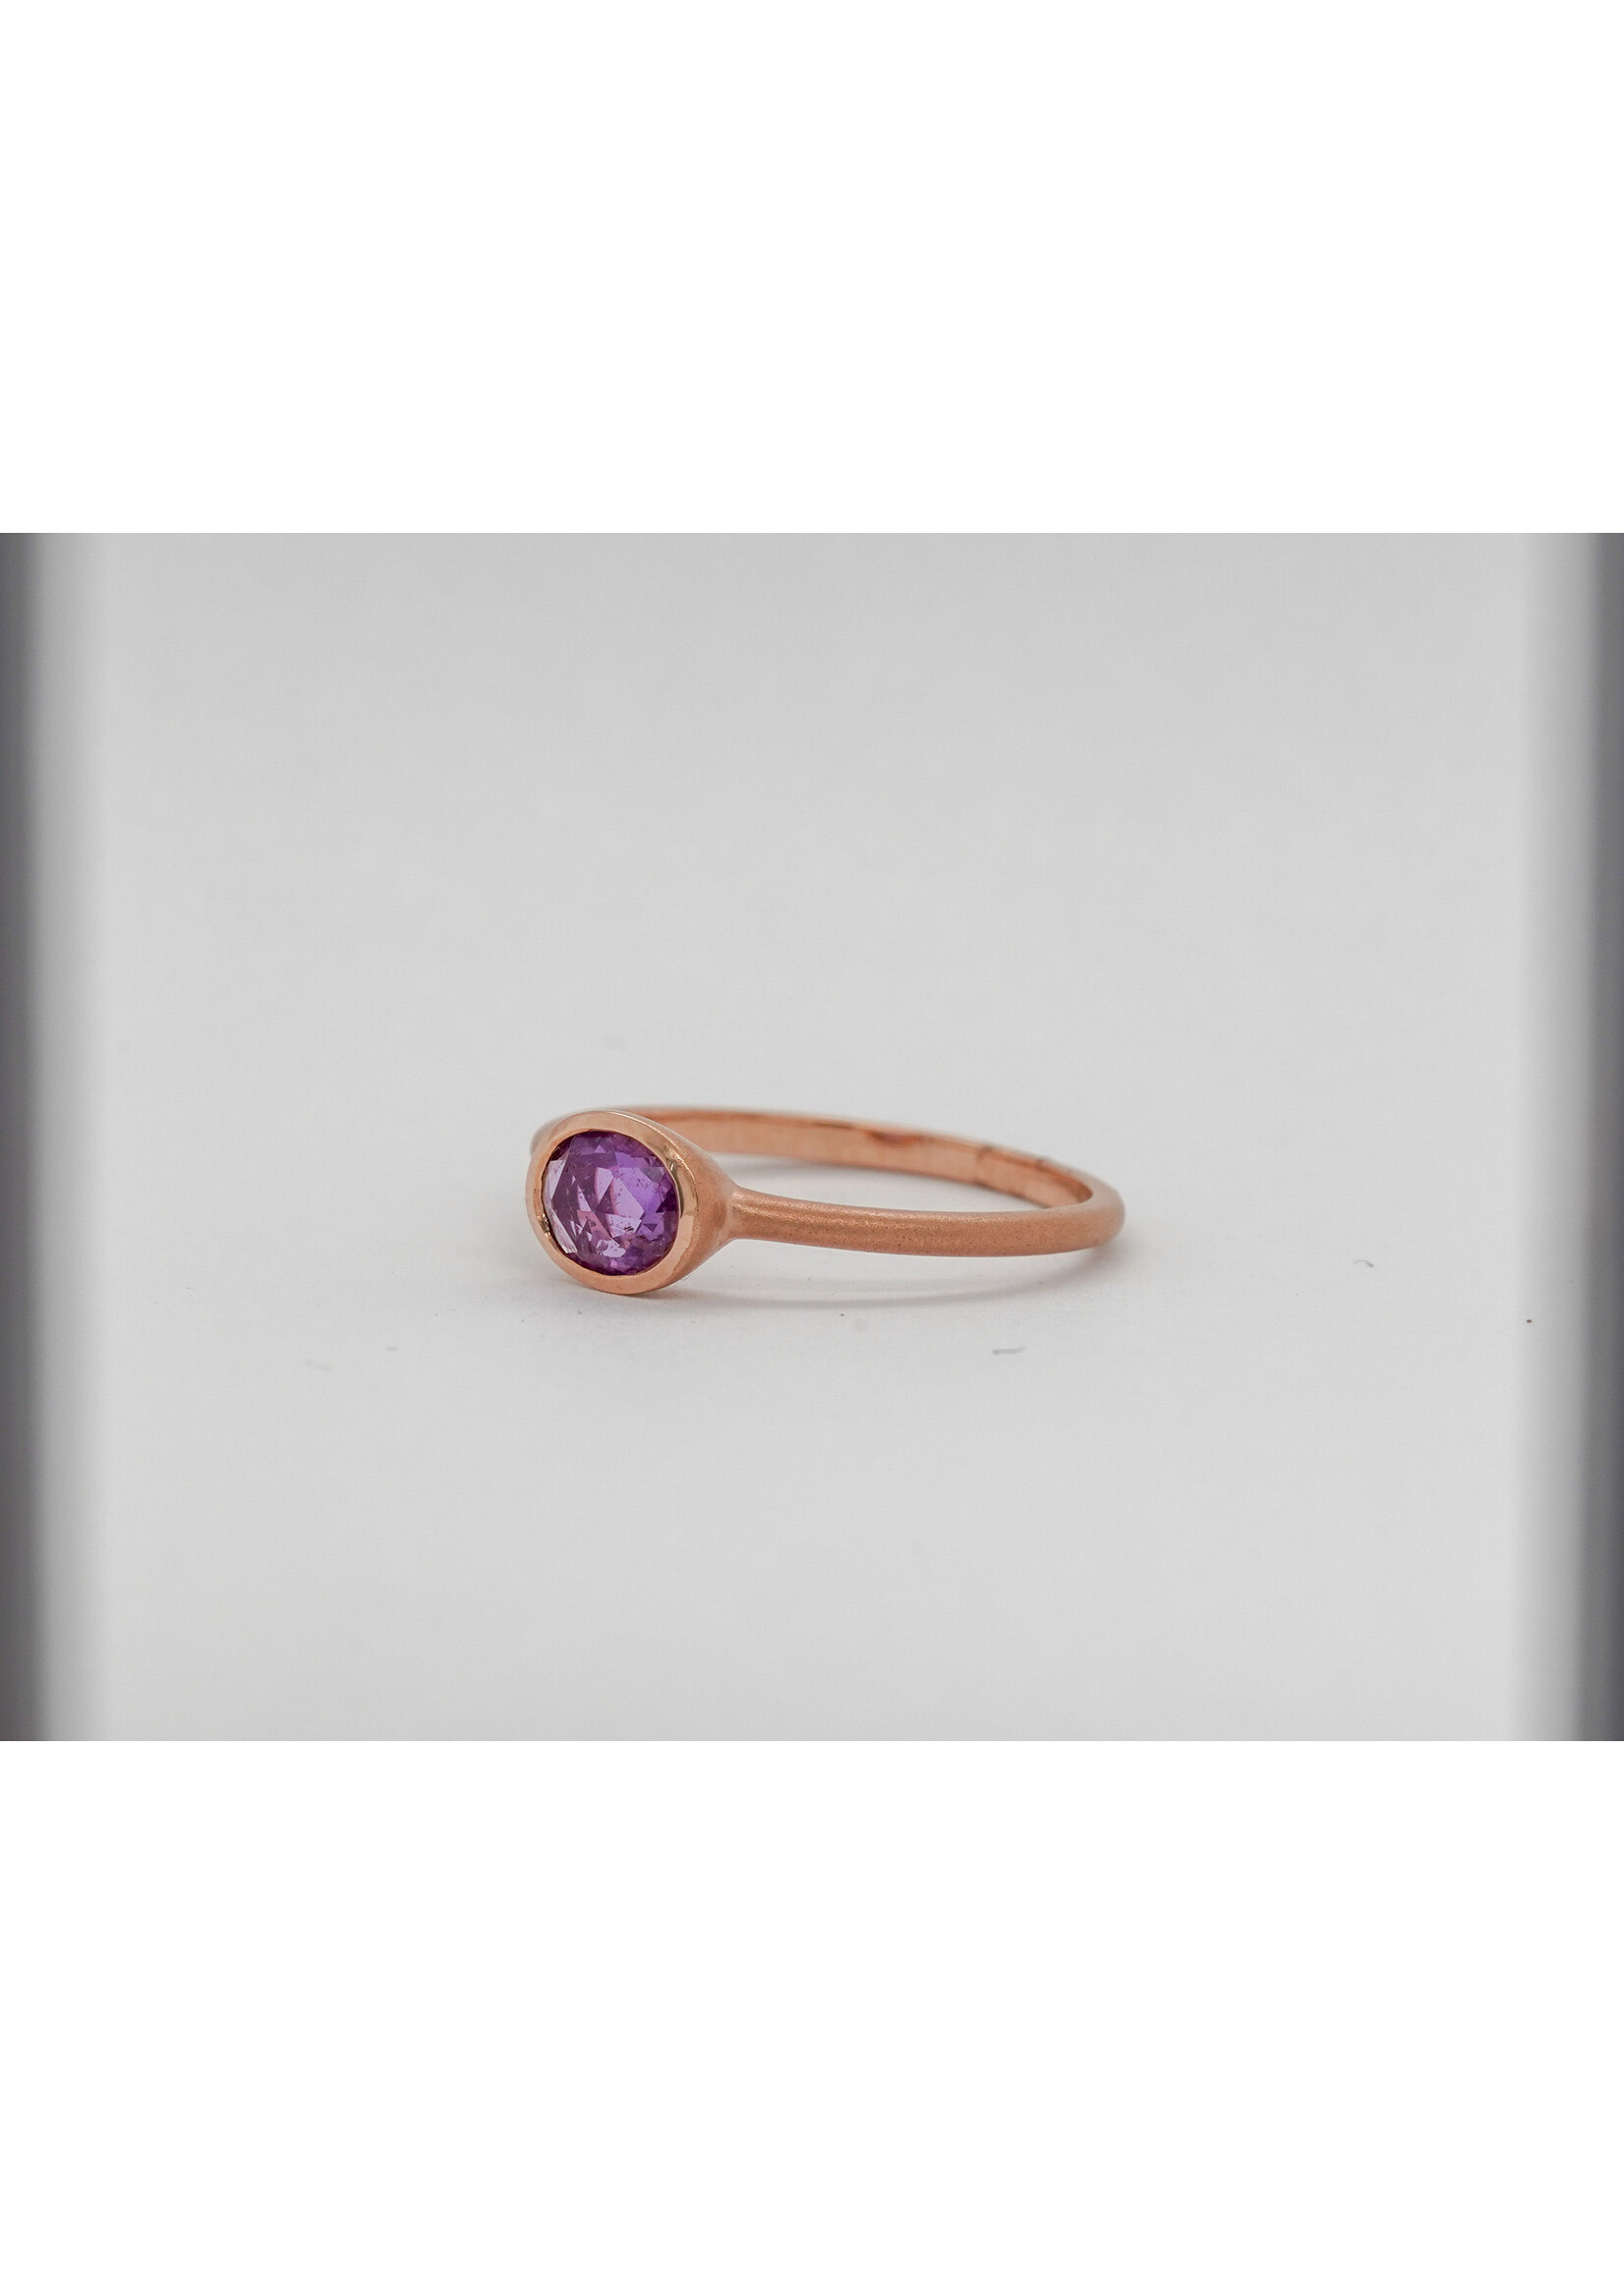 14KR 1.5g .61ct Oval Lavender Sapphire Bezel Ring (size 7)